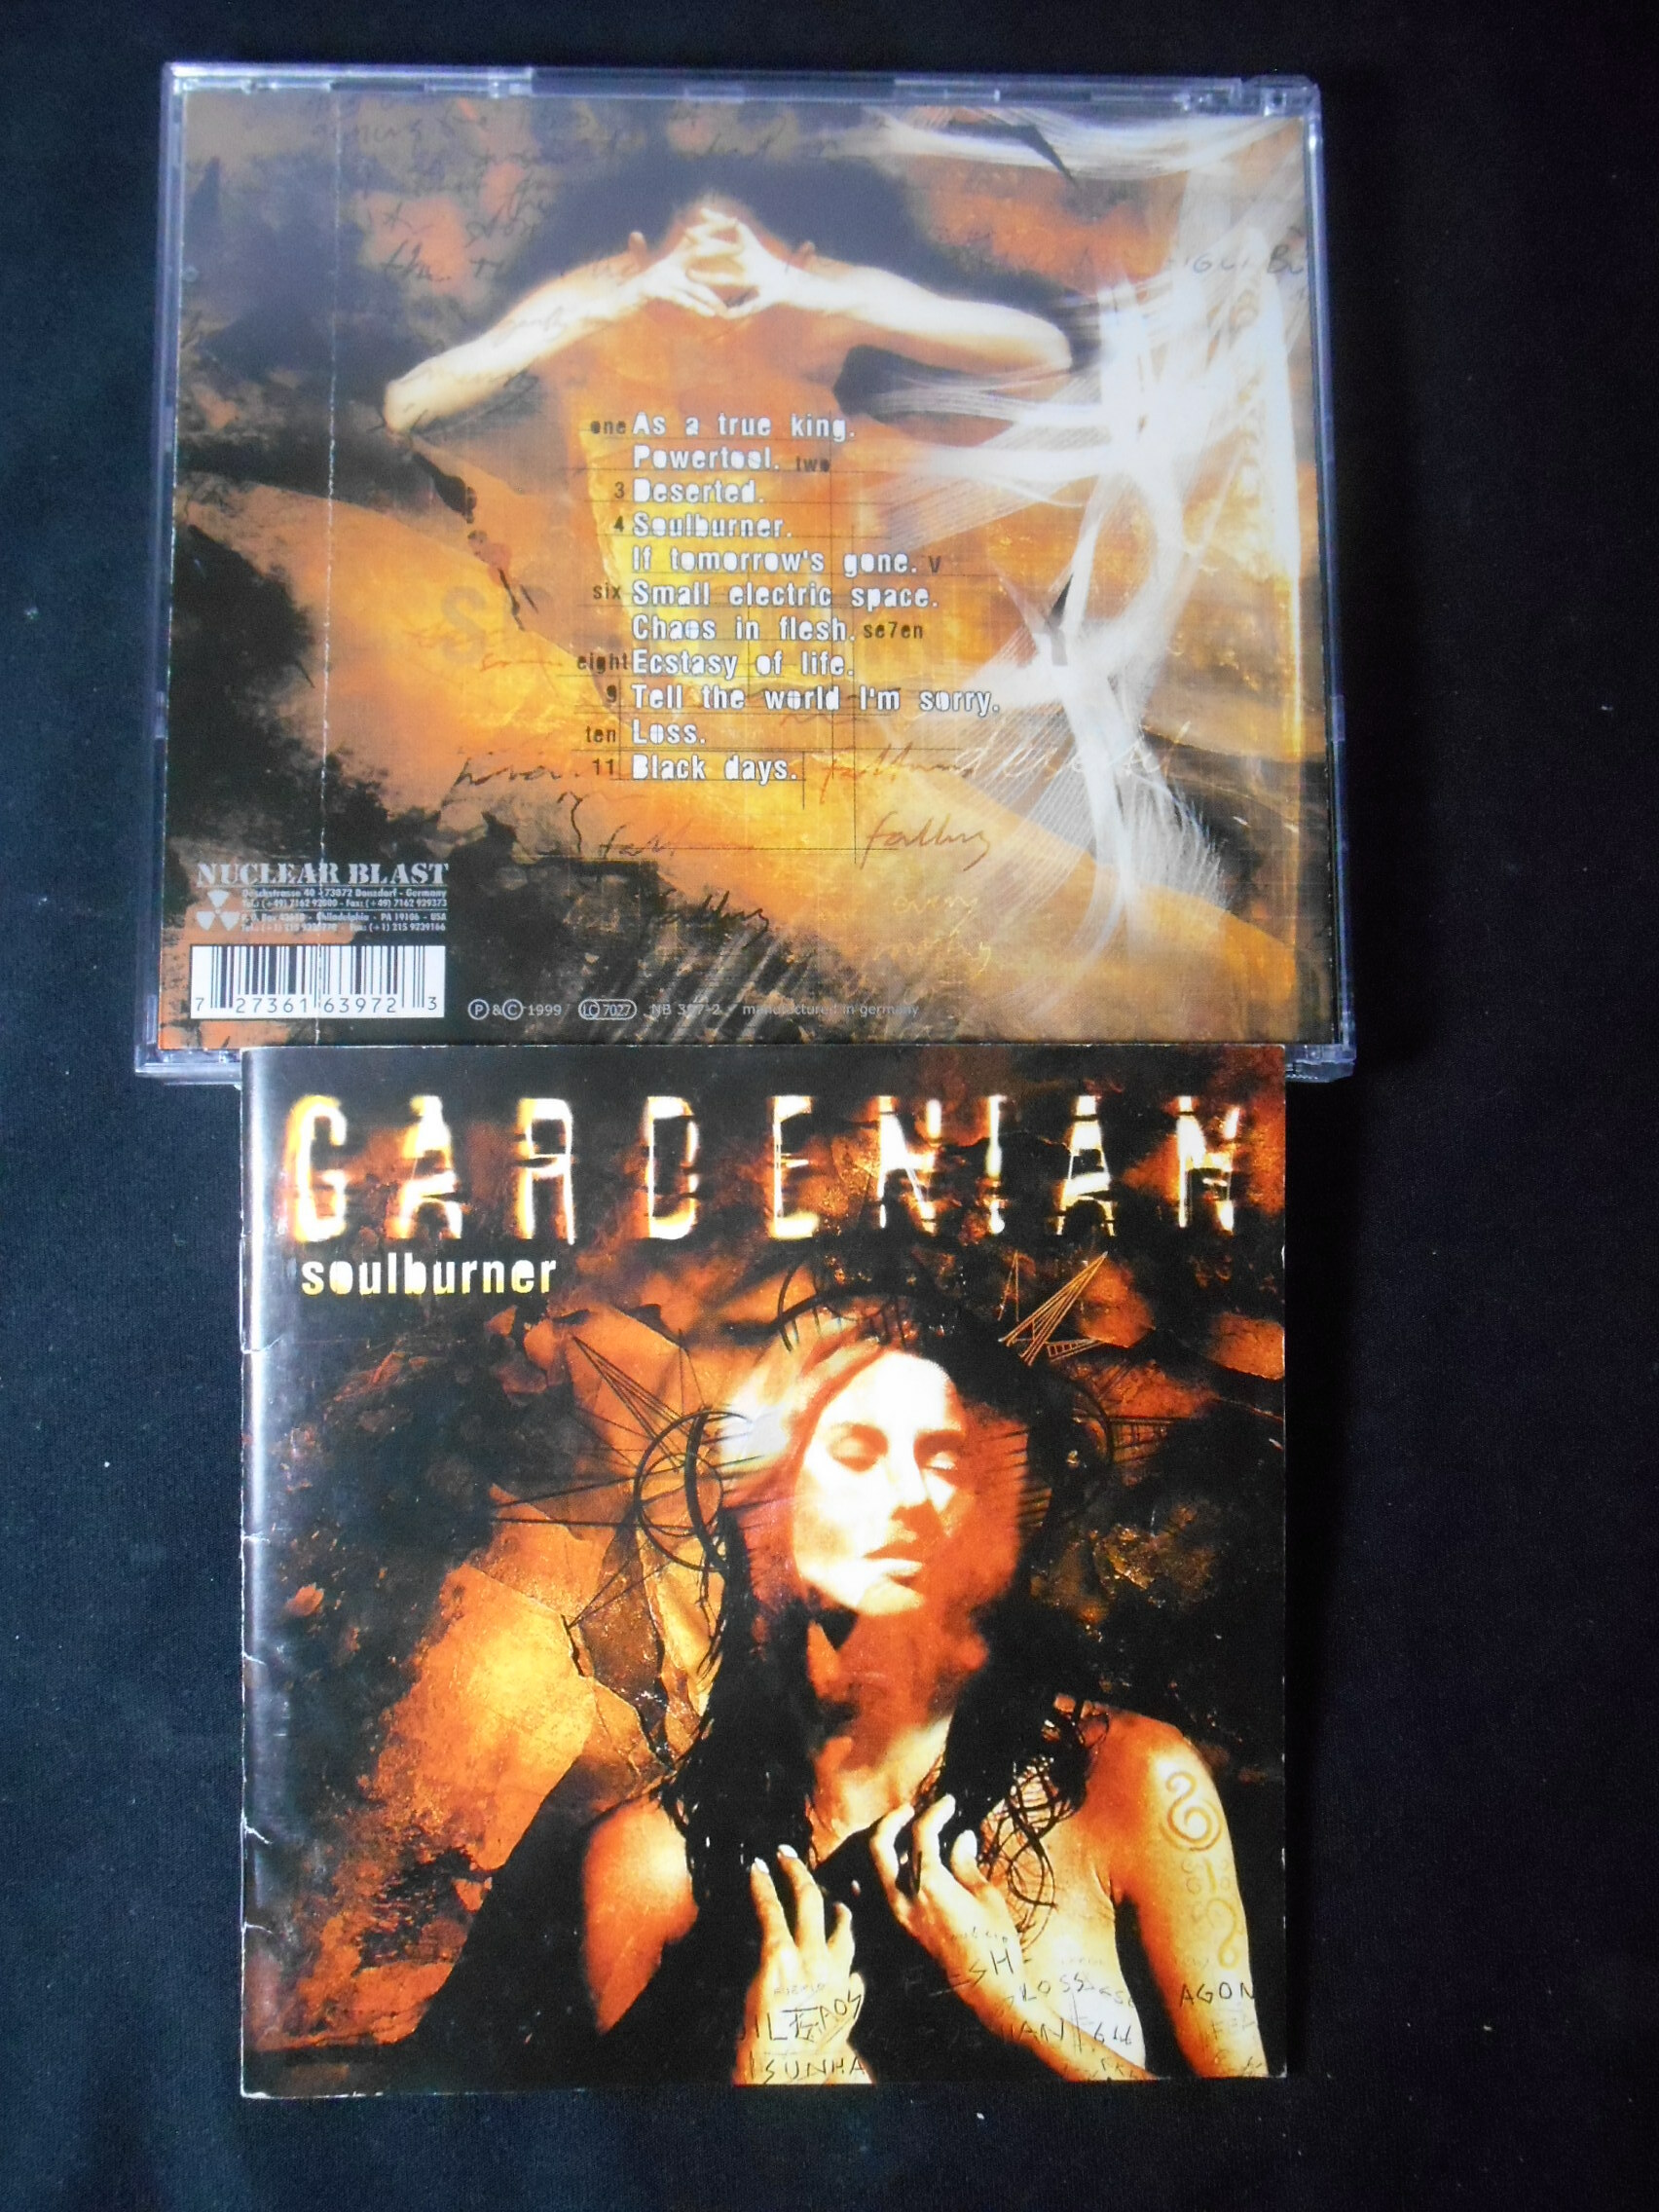 CD - Gardenian - Soulburner (Germany)